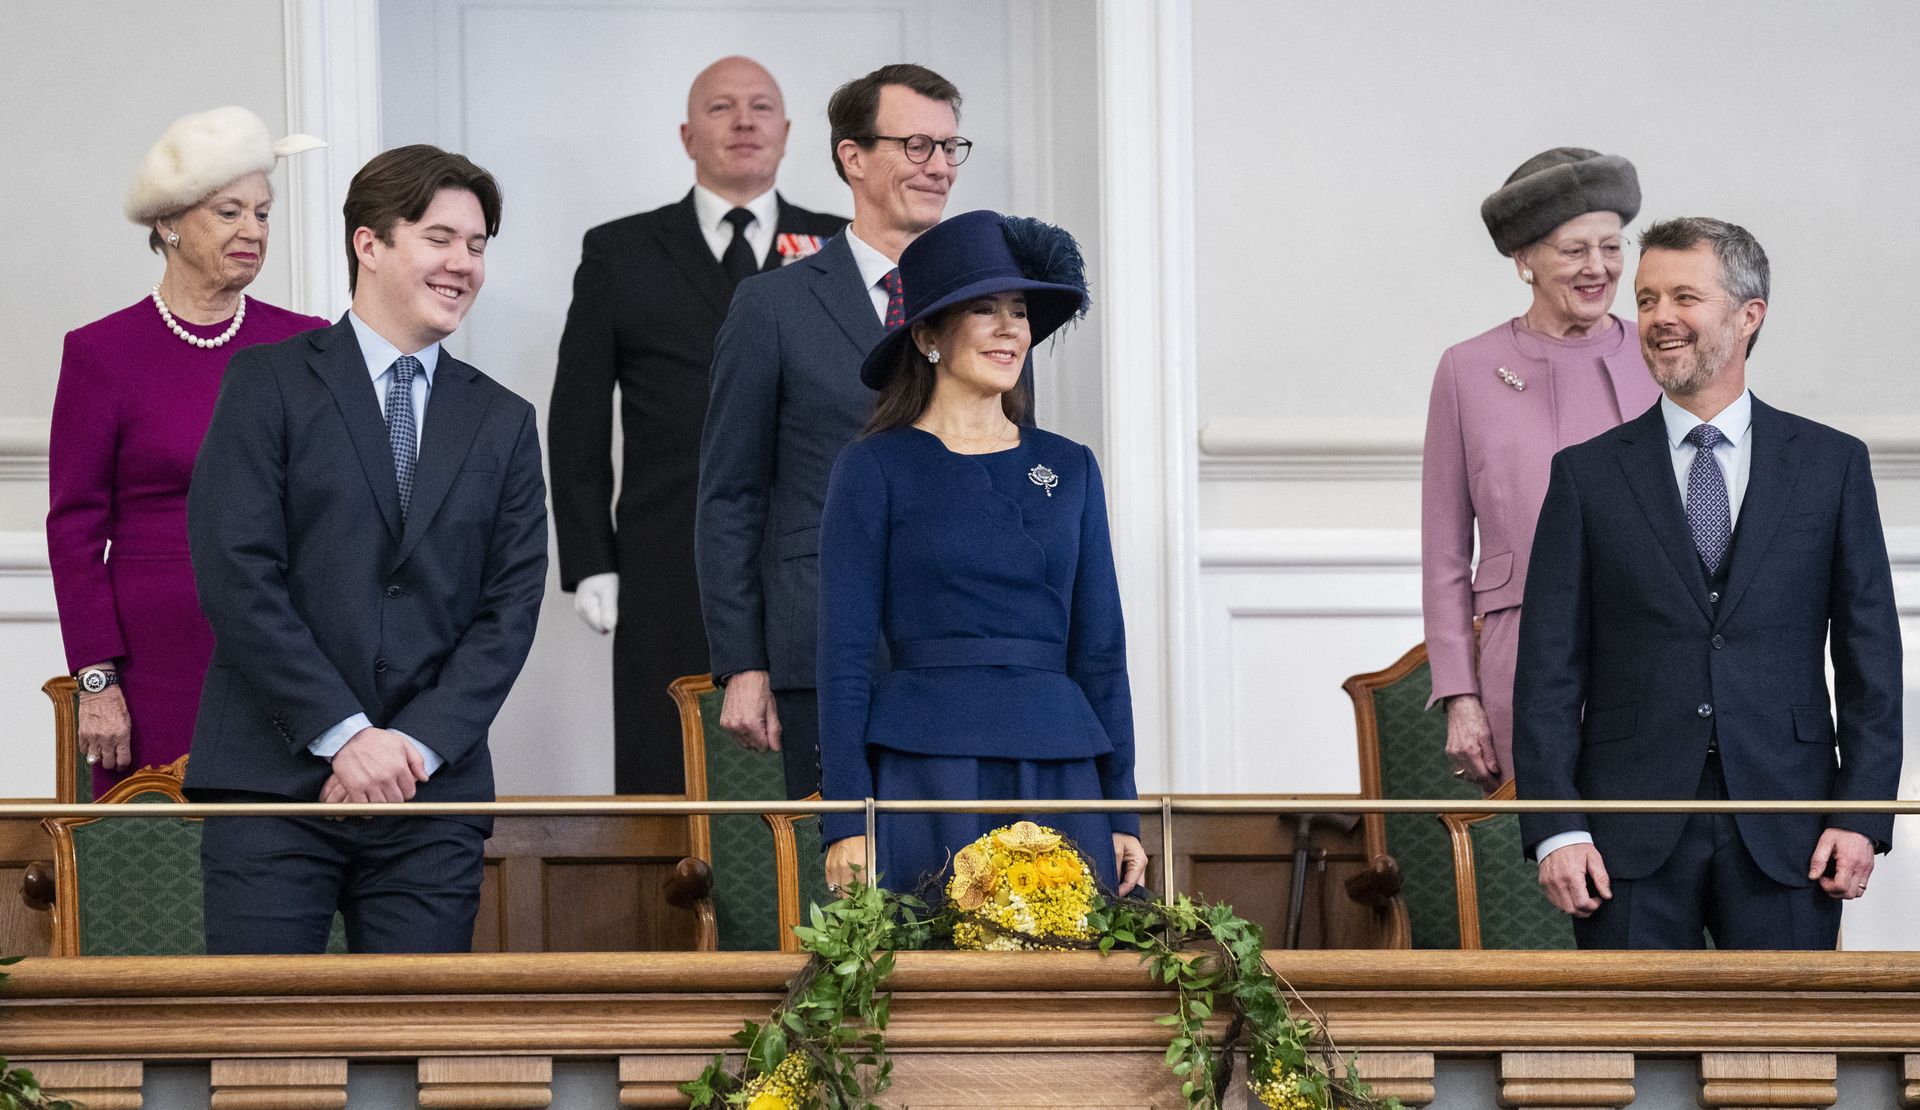 Danish Royal Family_Parliament